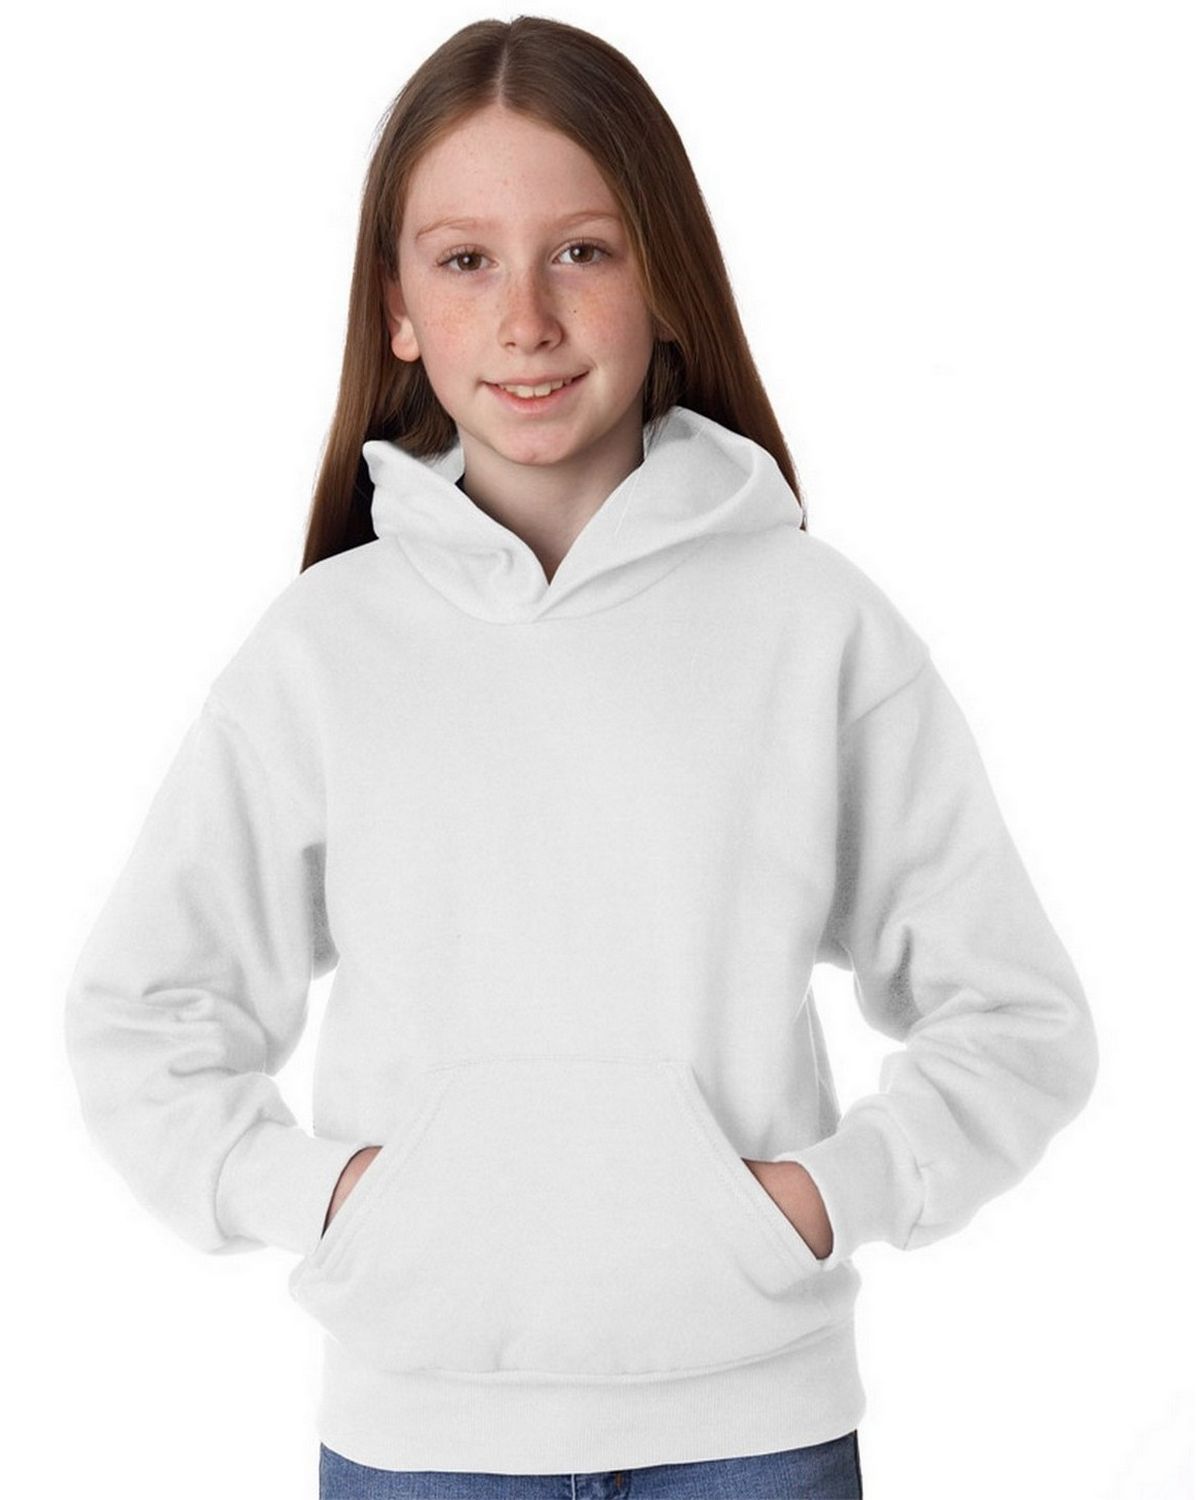 Hanes P470 Youth Hooded Sweatshirt